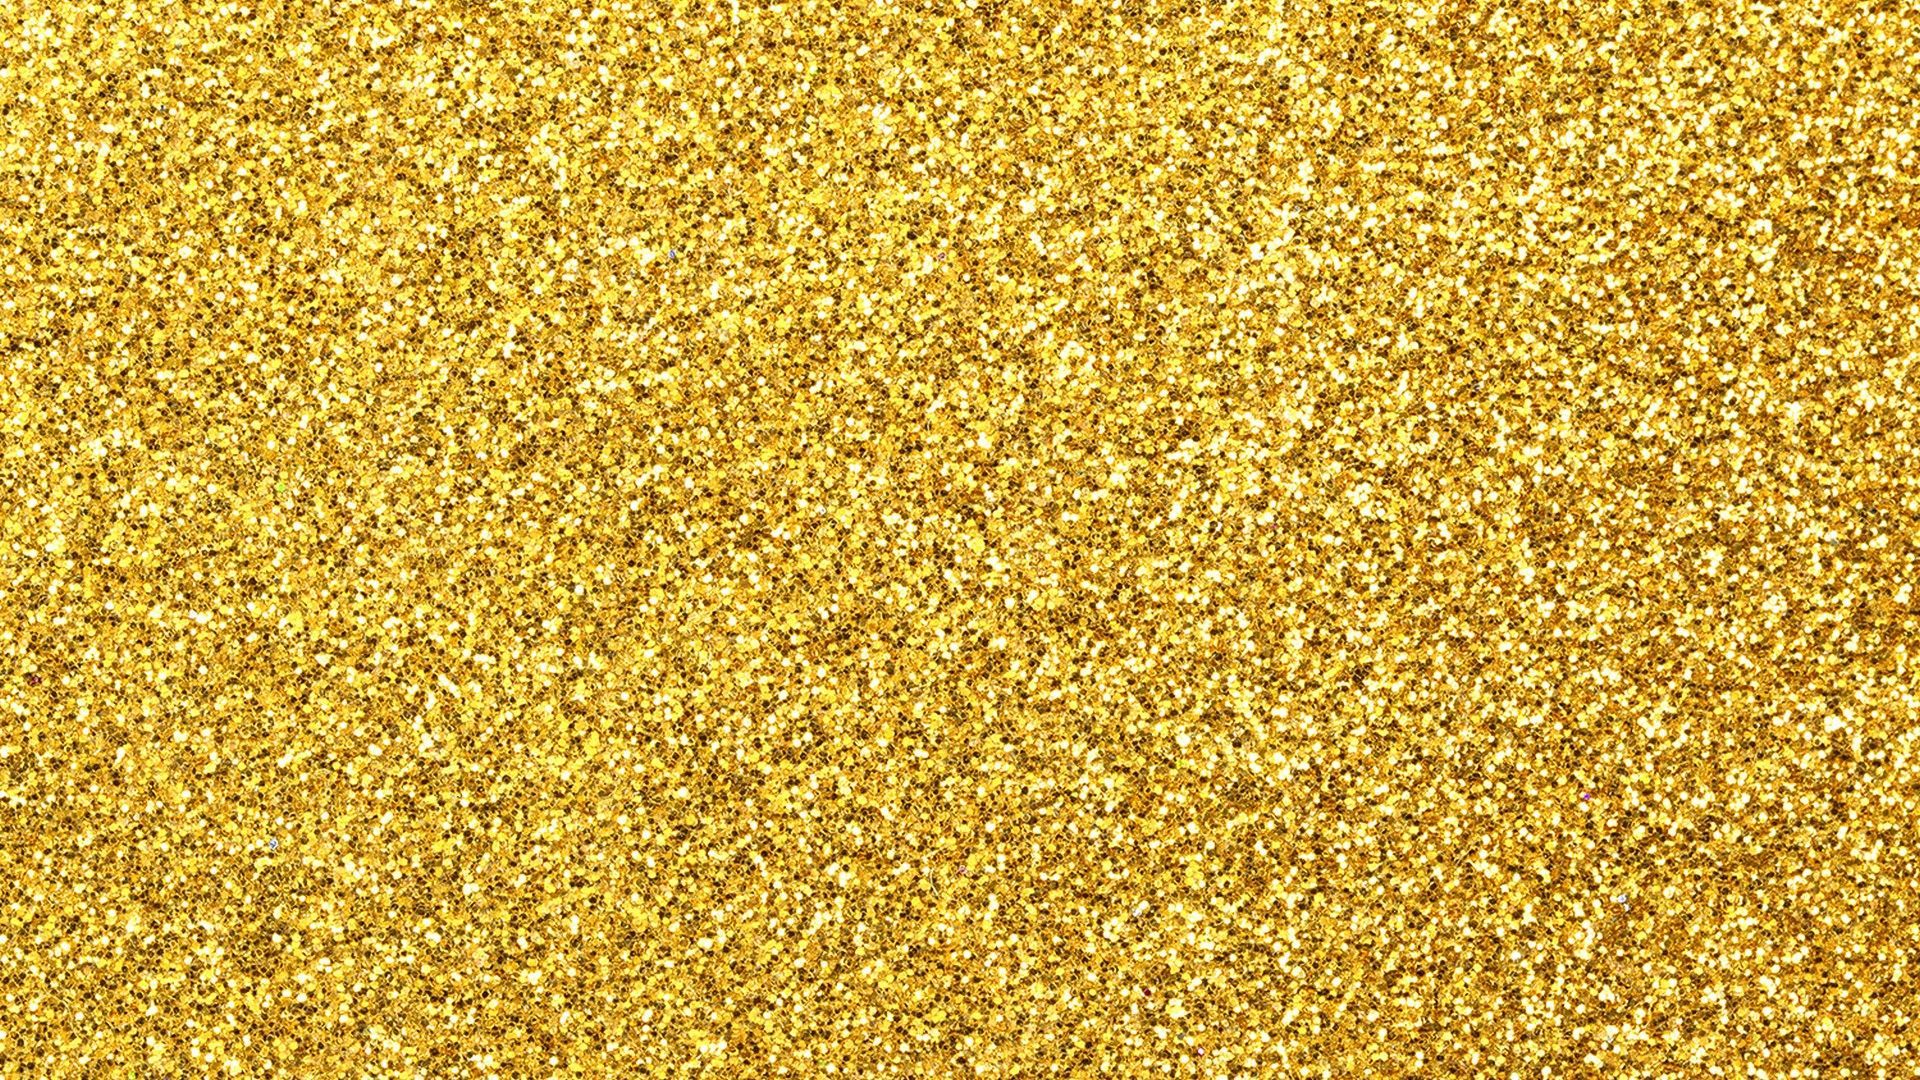 Gold Glitter Desktop Wallpaper Free Gold Glitter Desktop Background